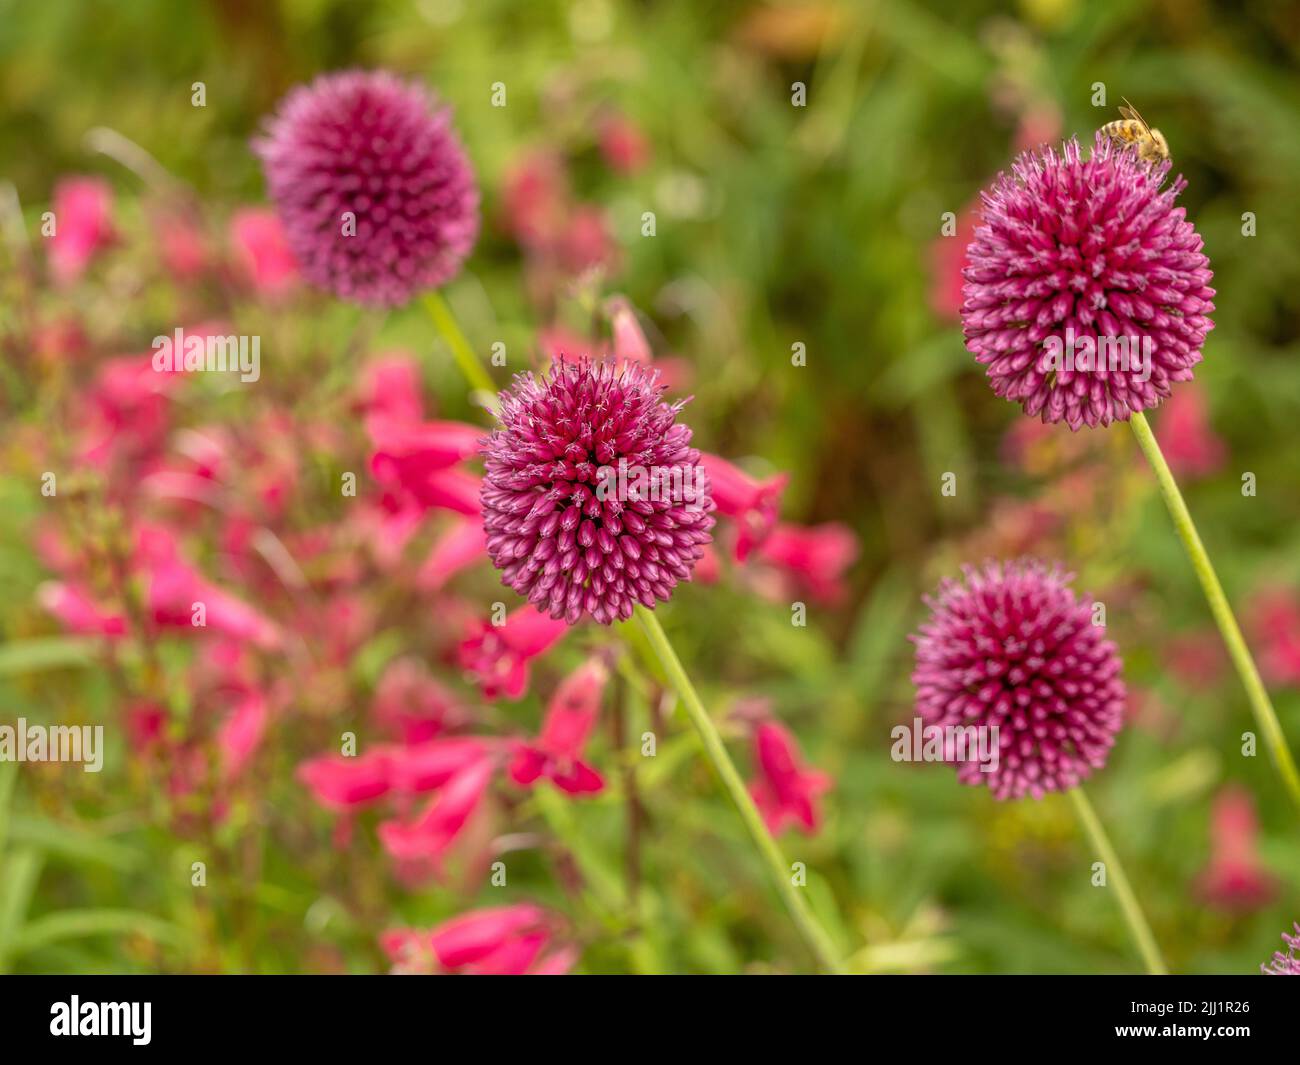 Magenta coloured flowers of Allium sphaerocephalon growing in a UK garden. Stock Photo